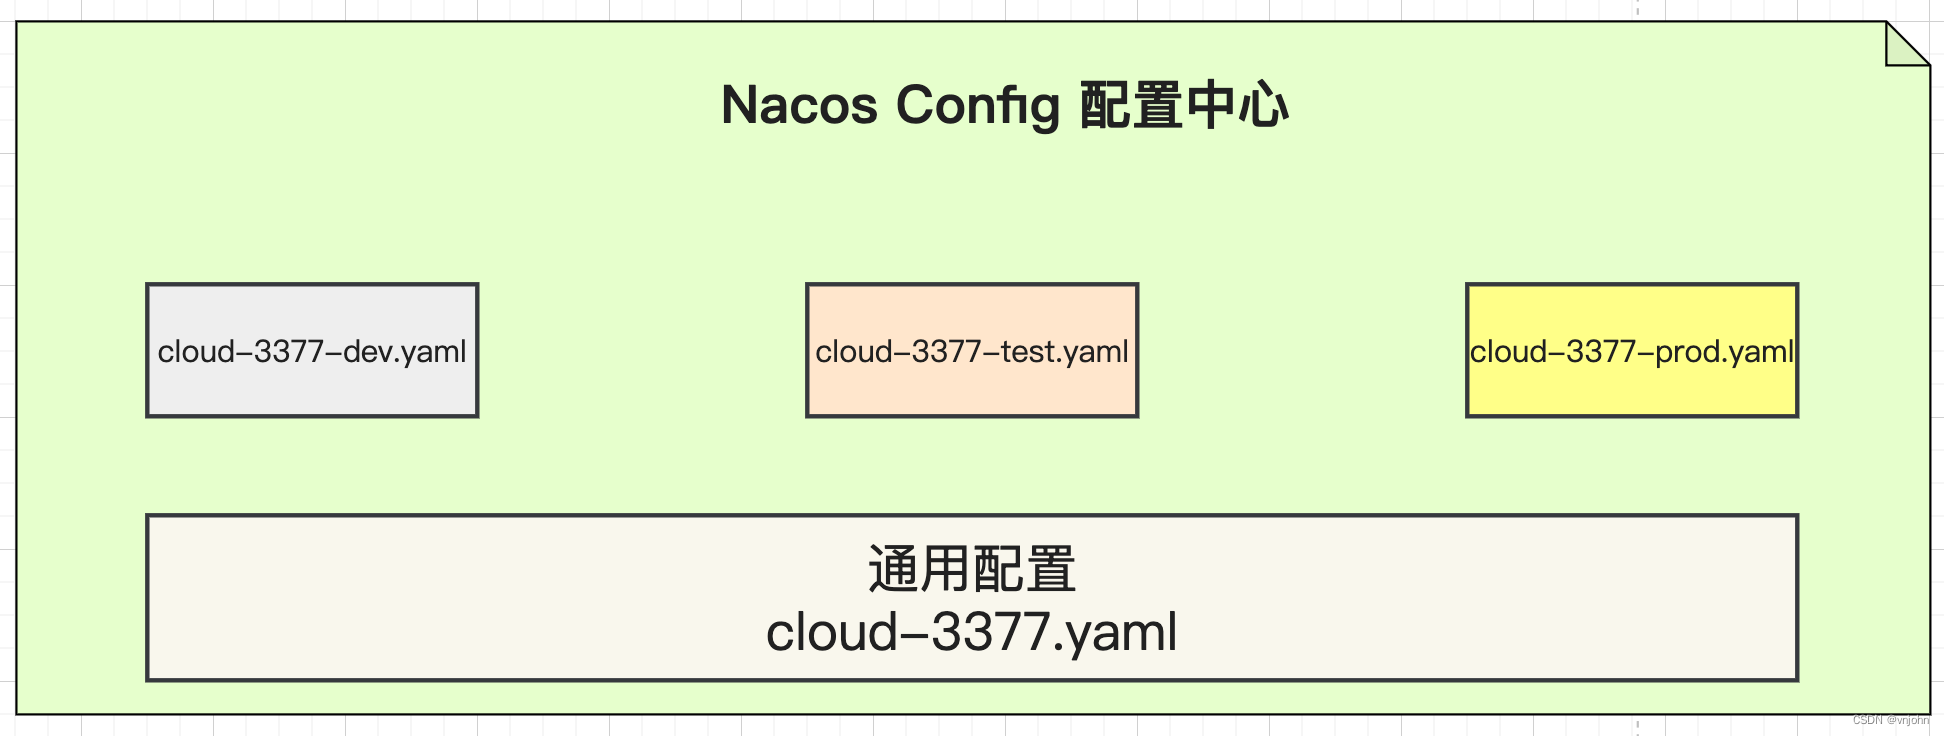 Nacos 配置中心实际运用场景以及配置优先级简要概述